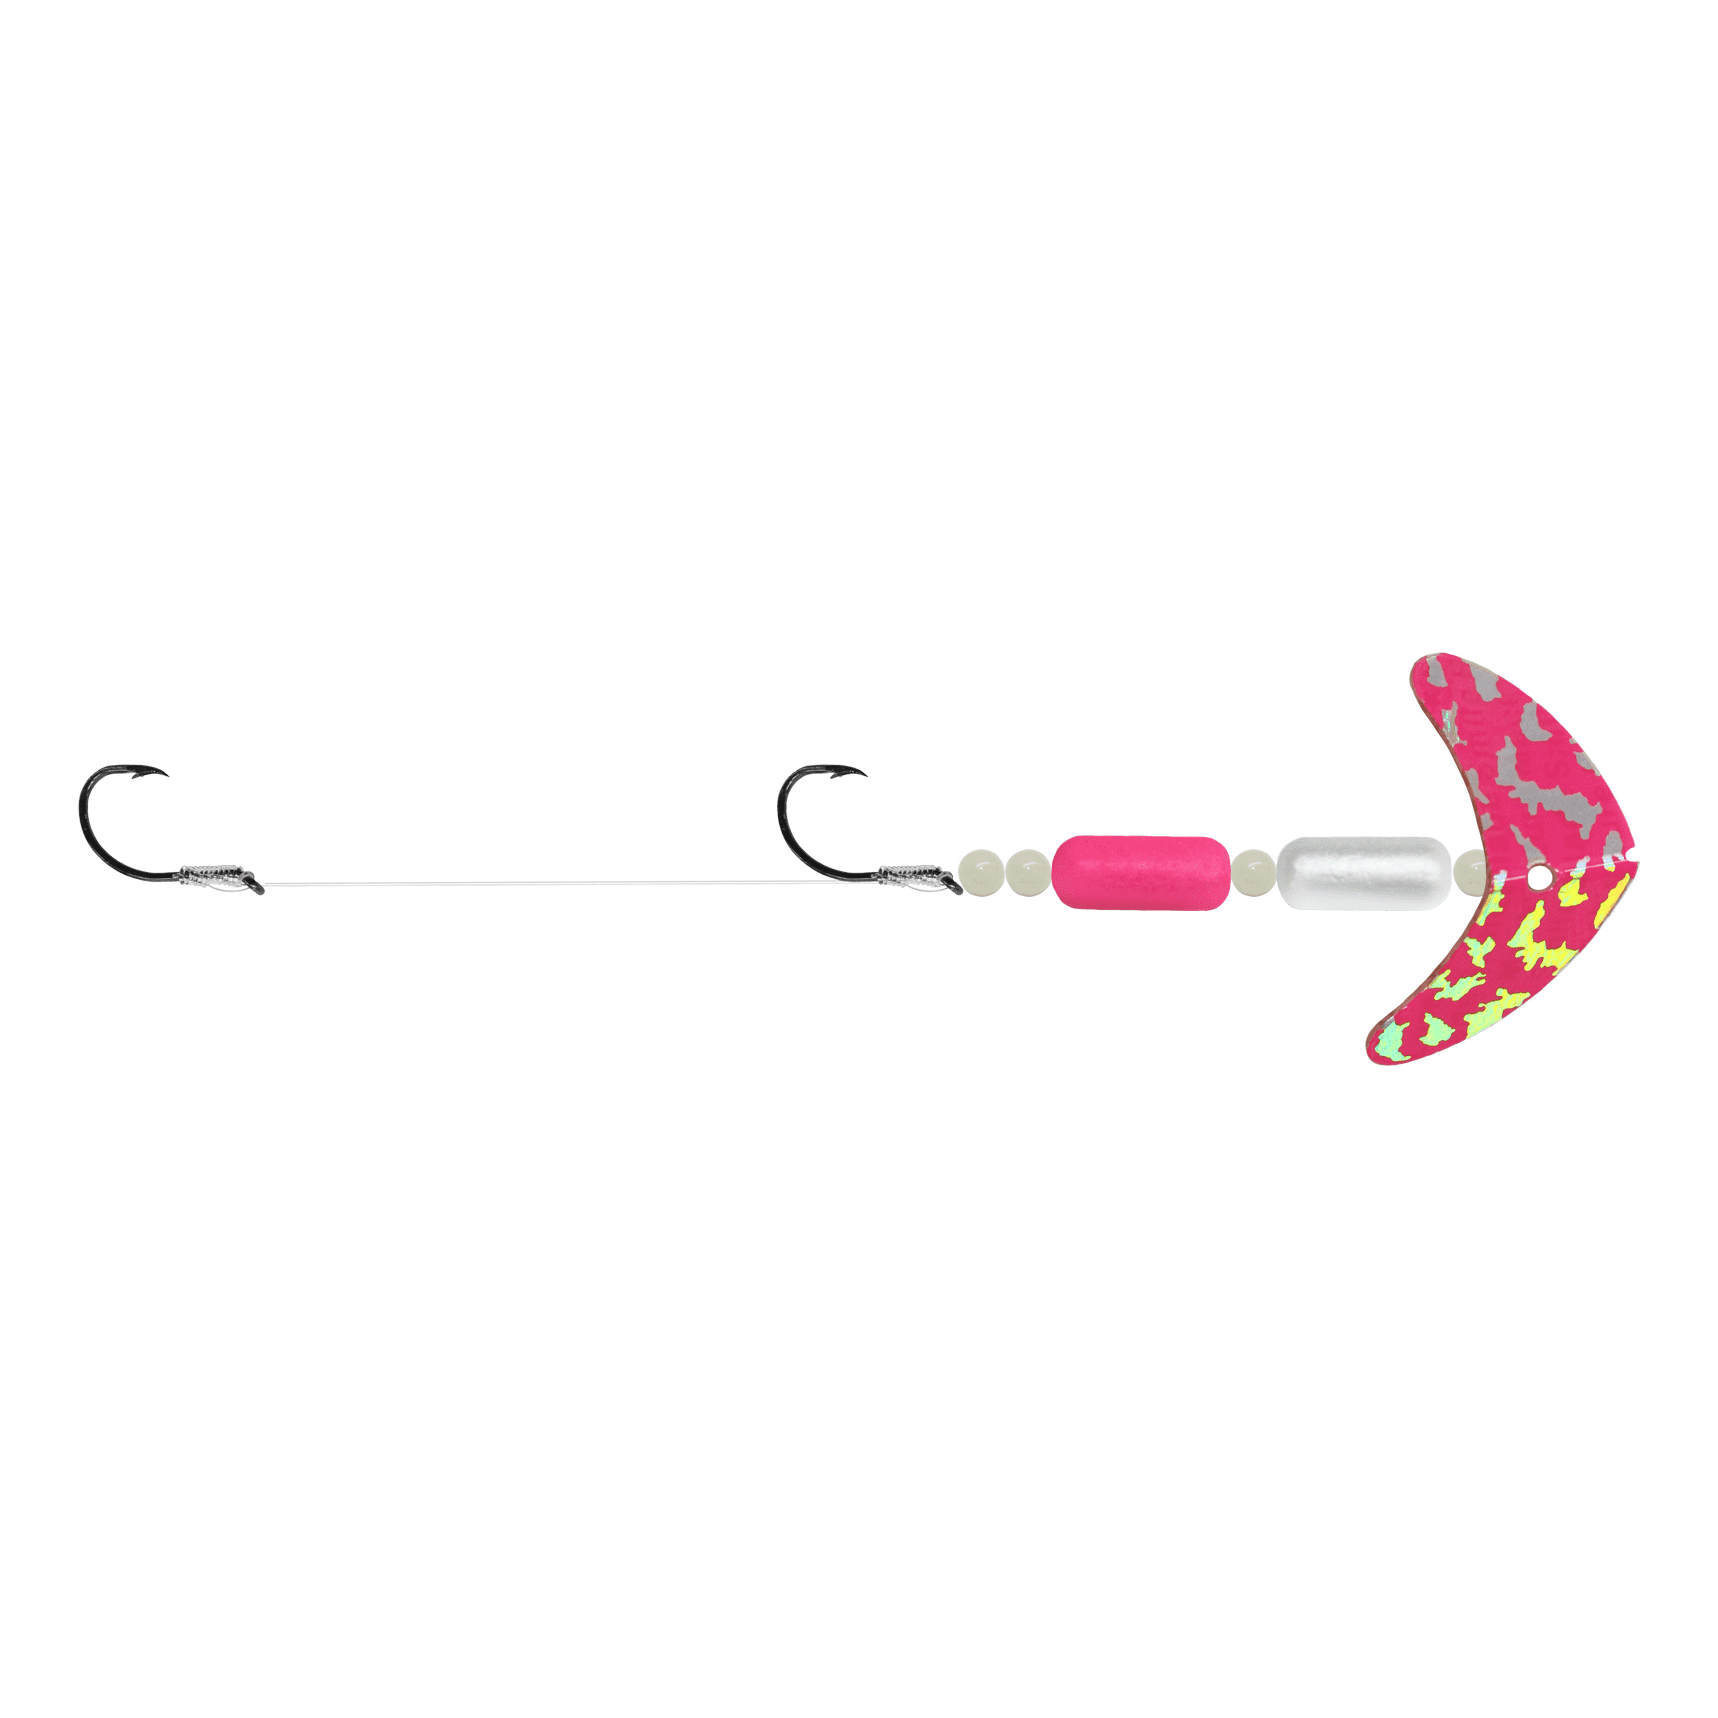 Mack's Lure 60230 Smile Blade Fly #2 Hook, Pink Sparkle Smile